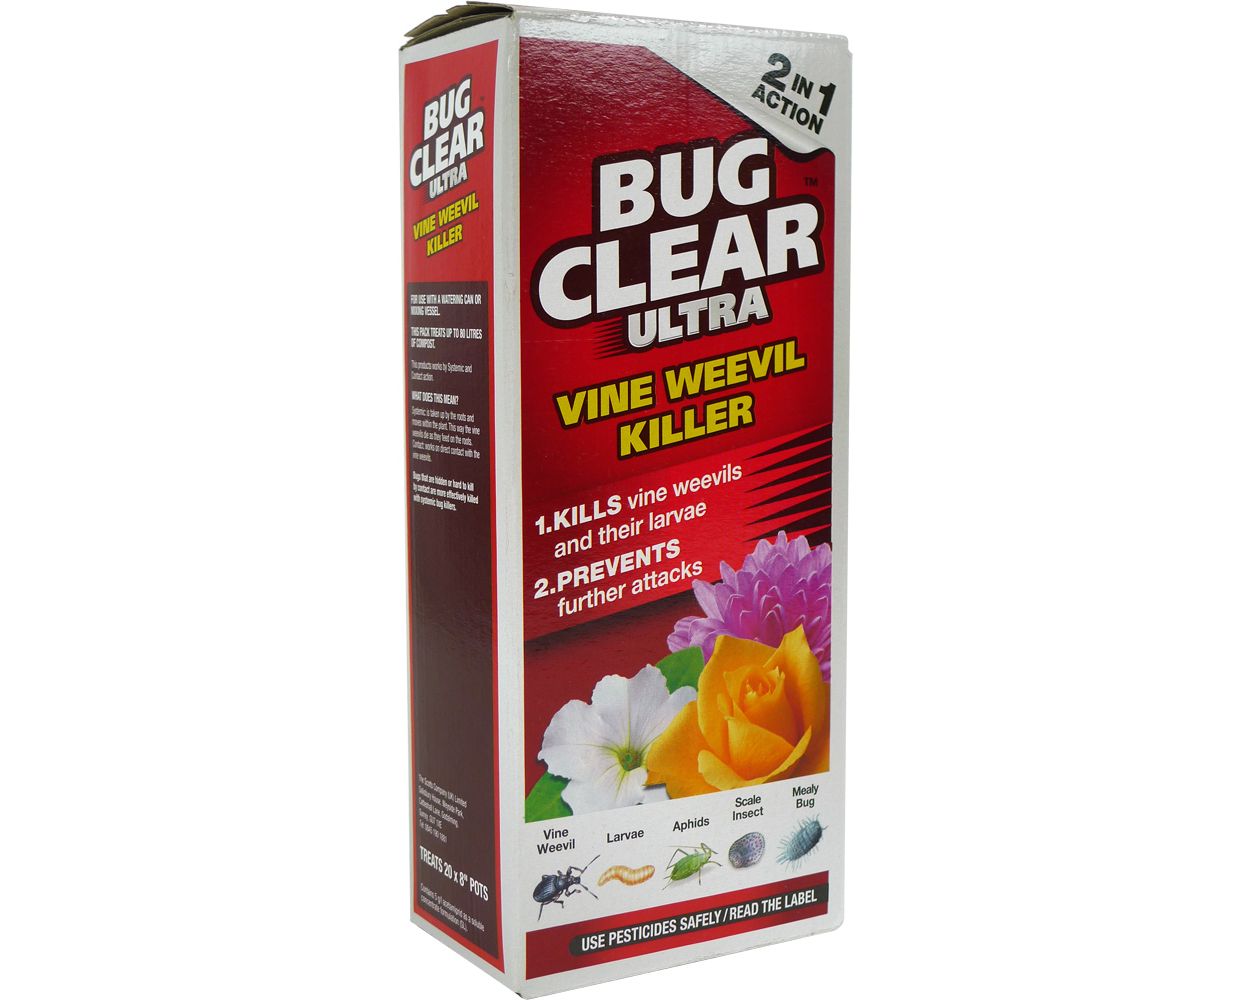 Bug Clear Ultra Vine Weevil Killer, 480ml